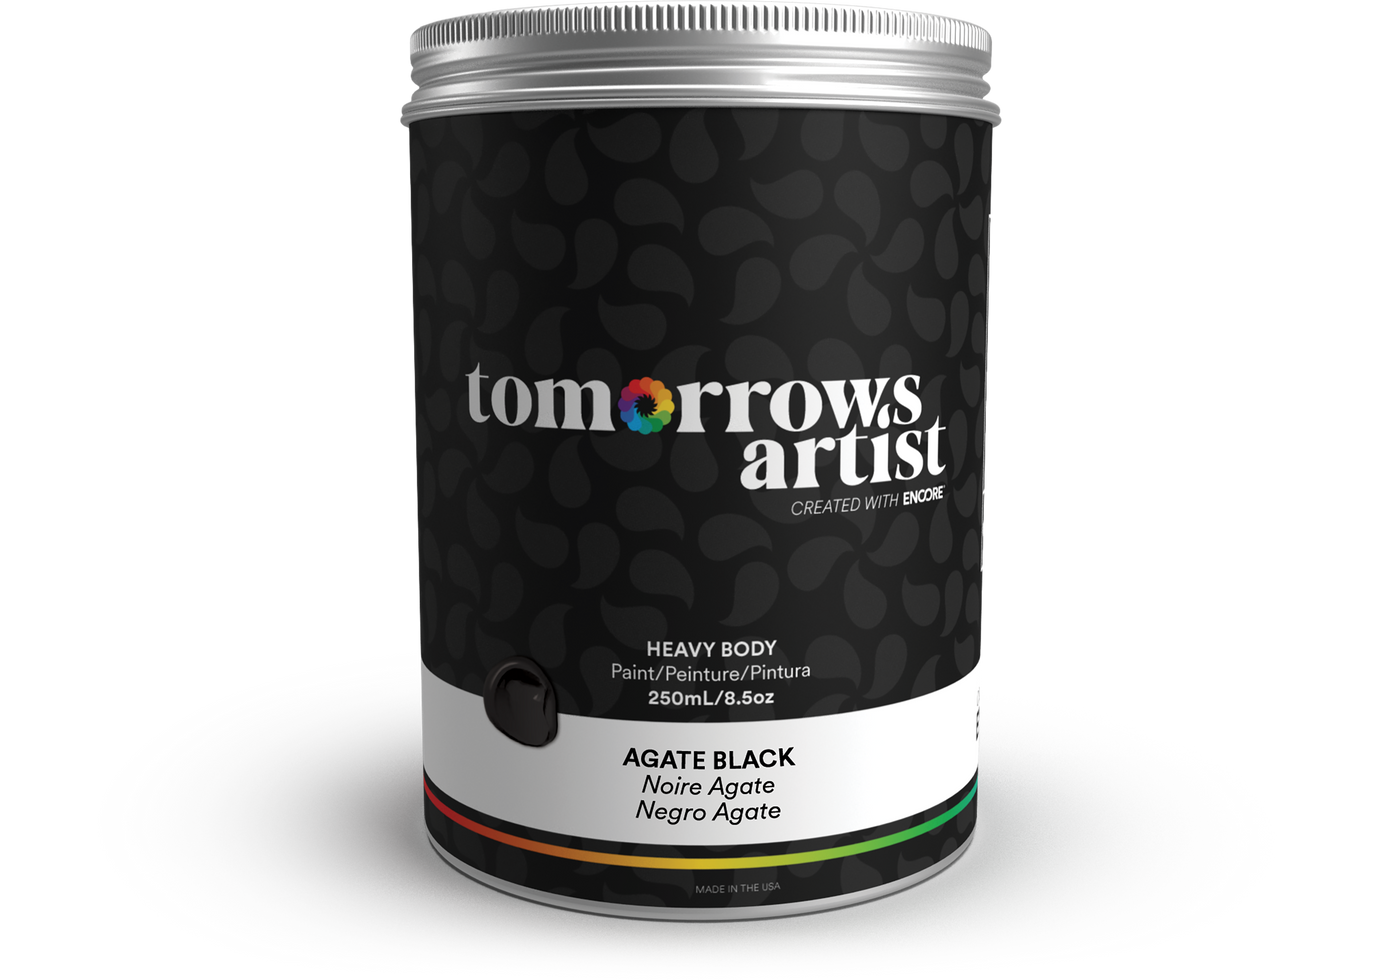 Tomorrows Artist: Heavy Body Eco-Friendly Acrylic Art Paint 250ml/8.45oz Jar